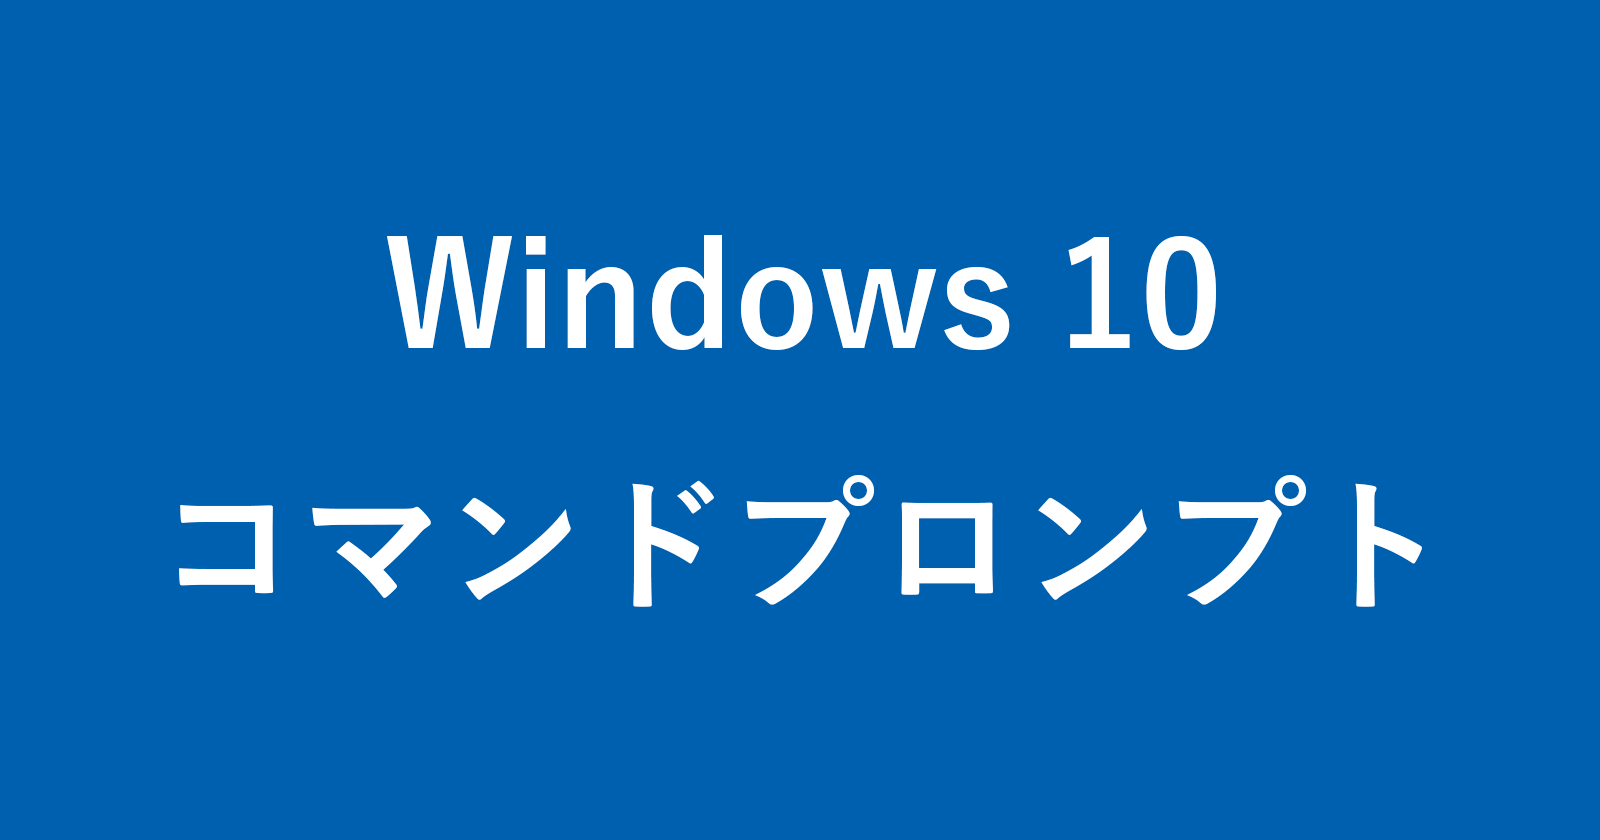 windows 10 command prompt